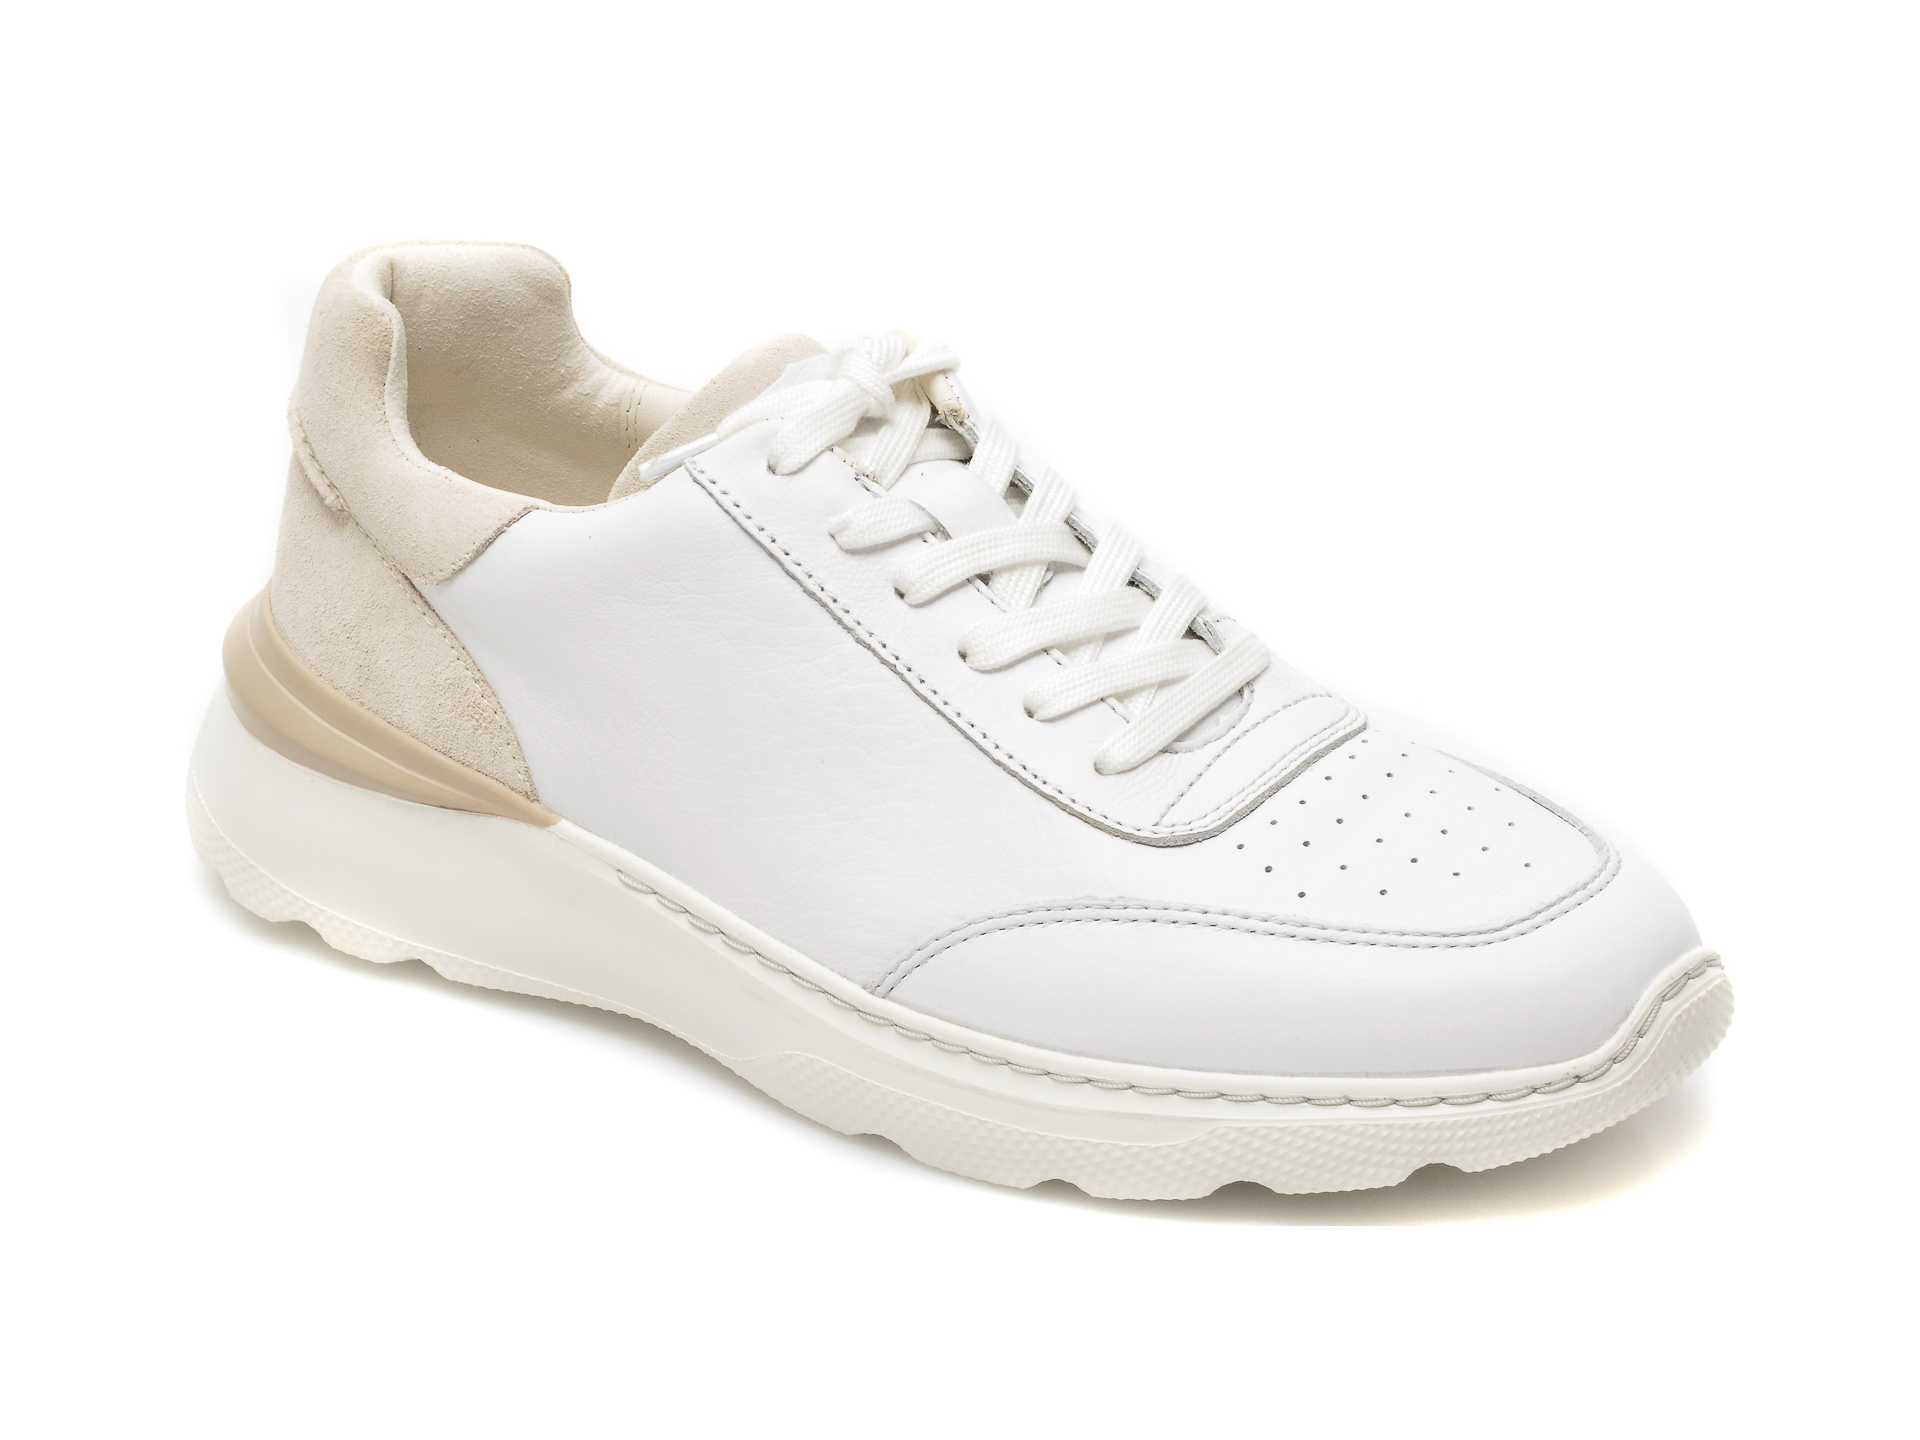 Pantofi CLARKS albi, Sprintlitelace, din piele naturala Clarks